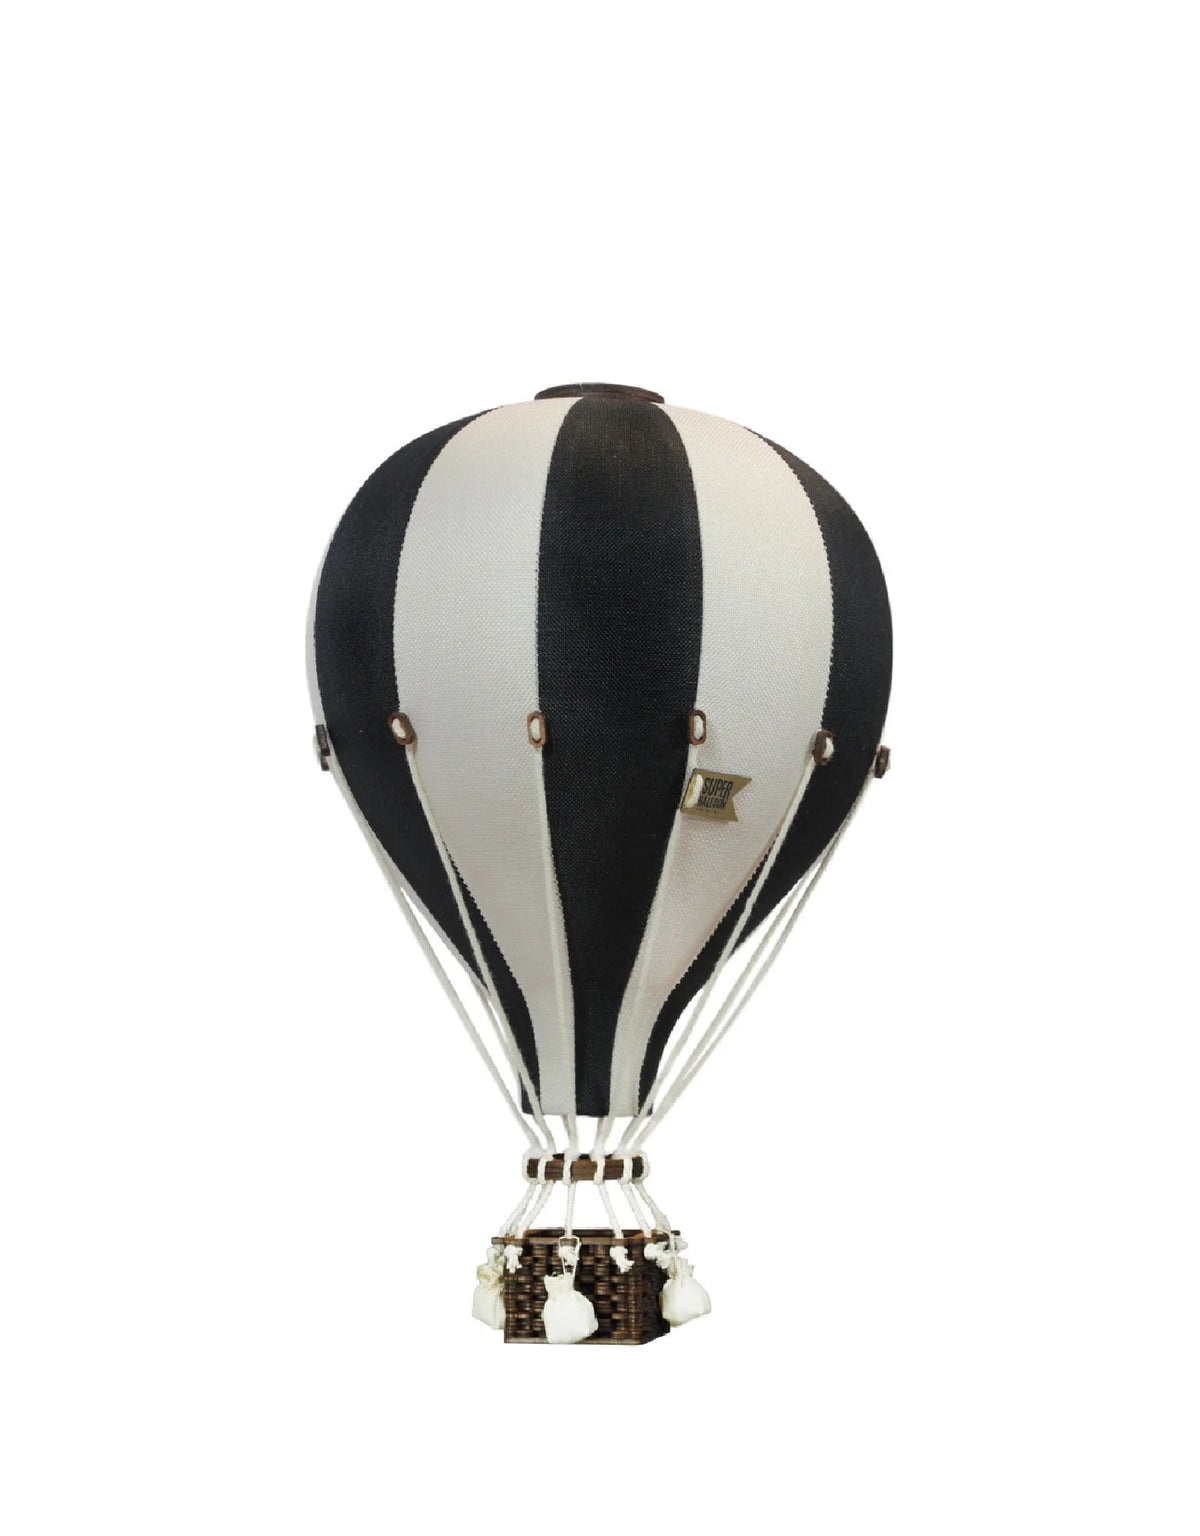 Decorative Hot Air Balloon | Large by Super Balloon - Maude Kids Decor